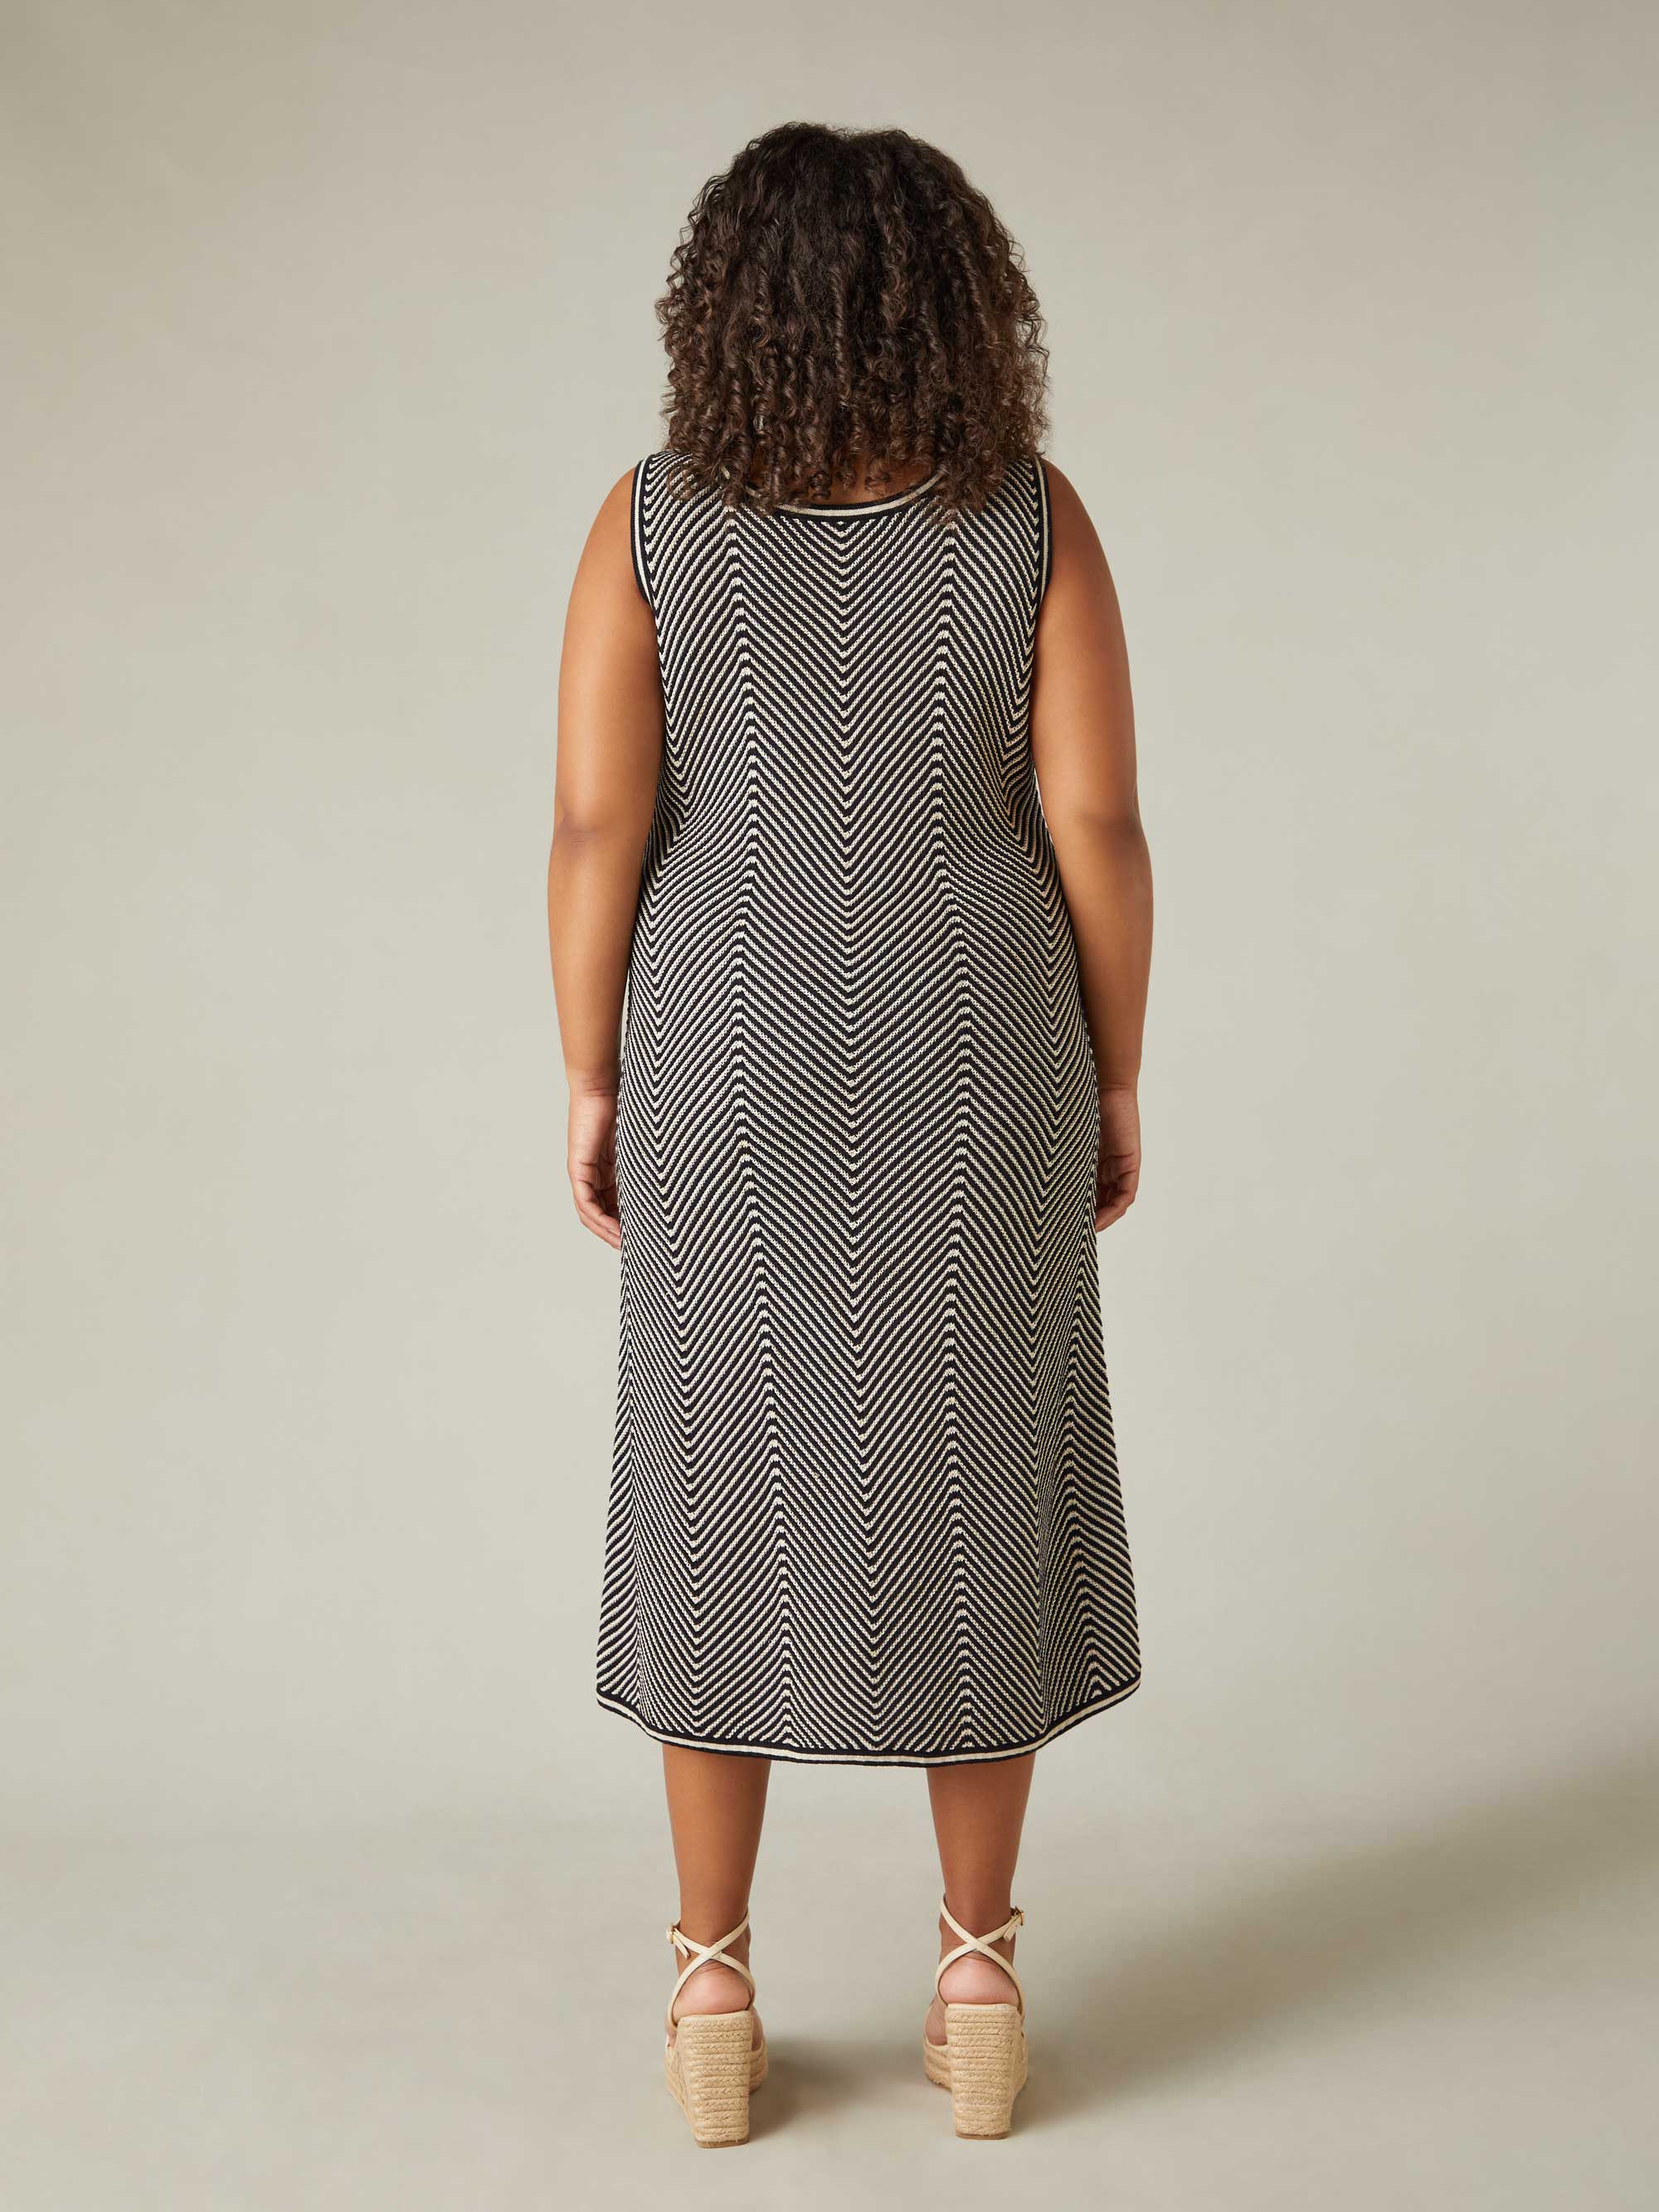 Chevron Knitted Dress